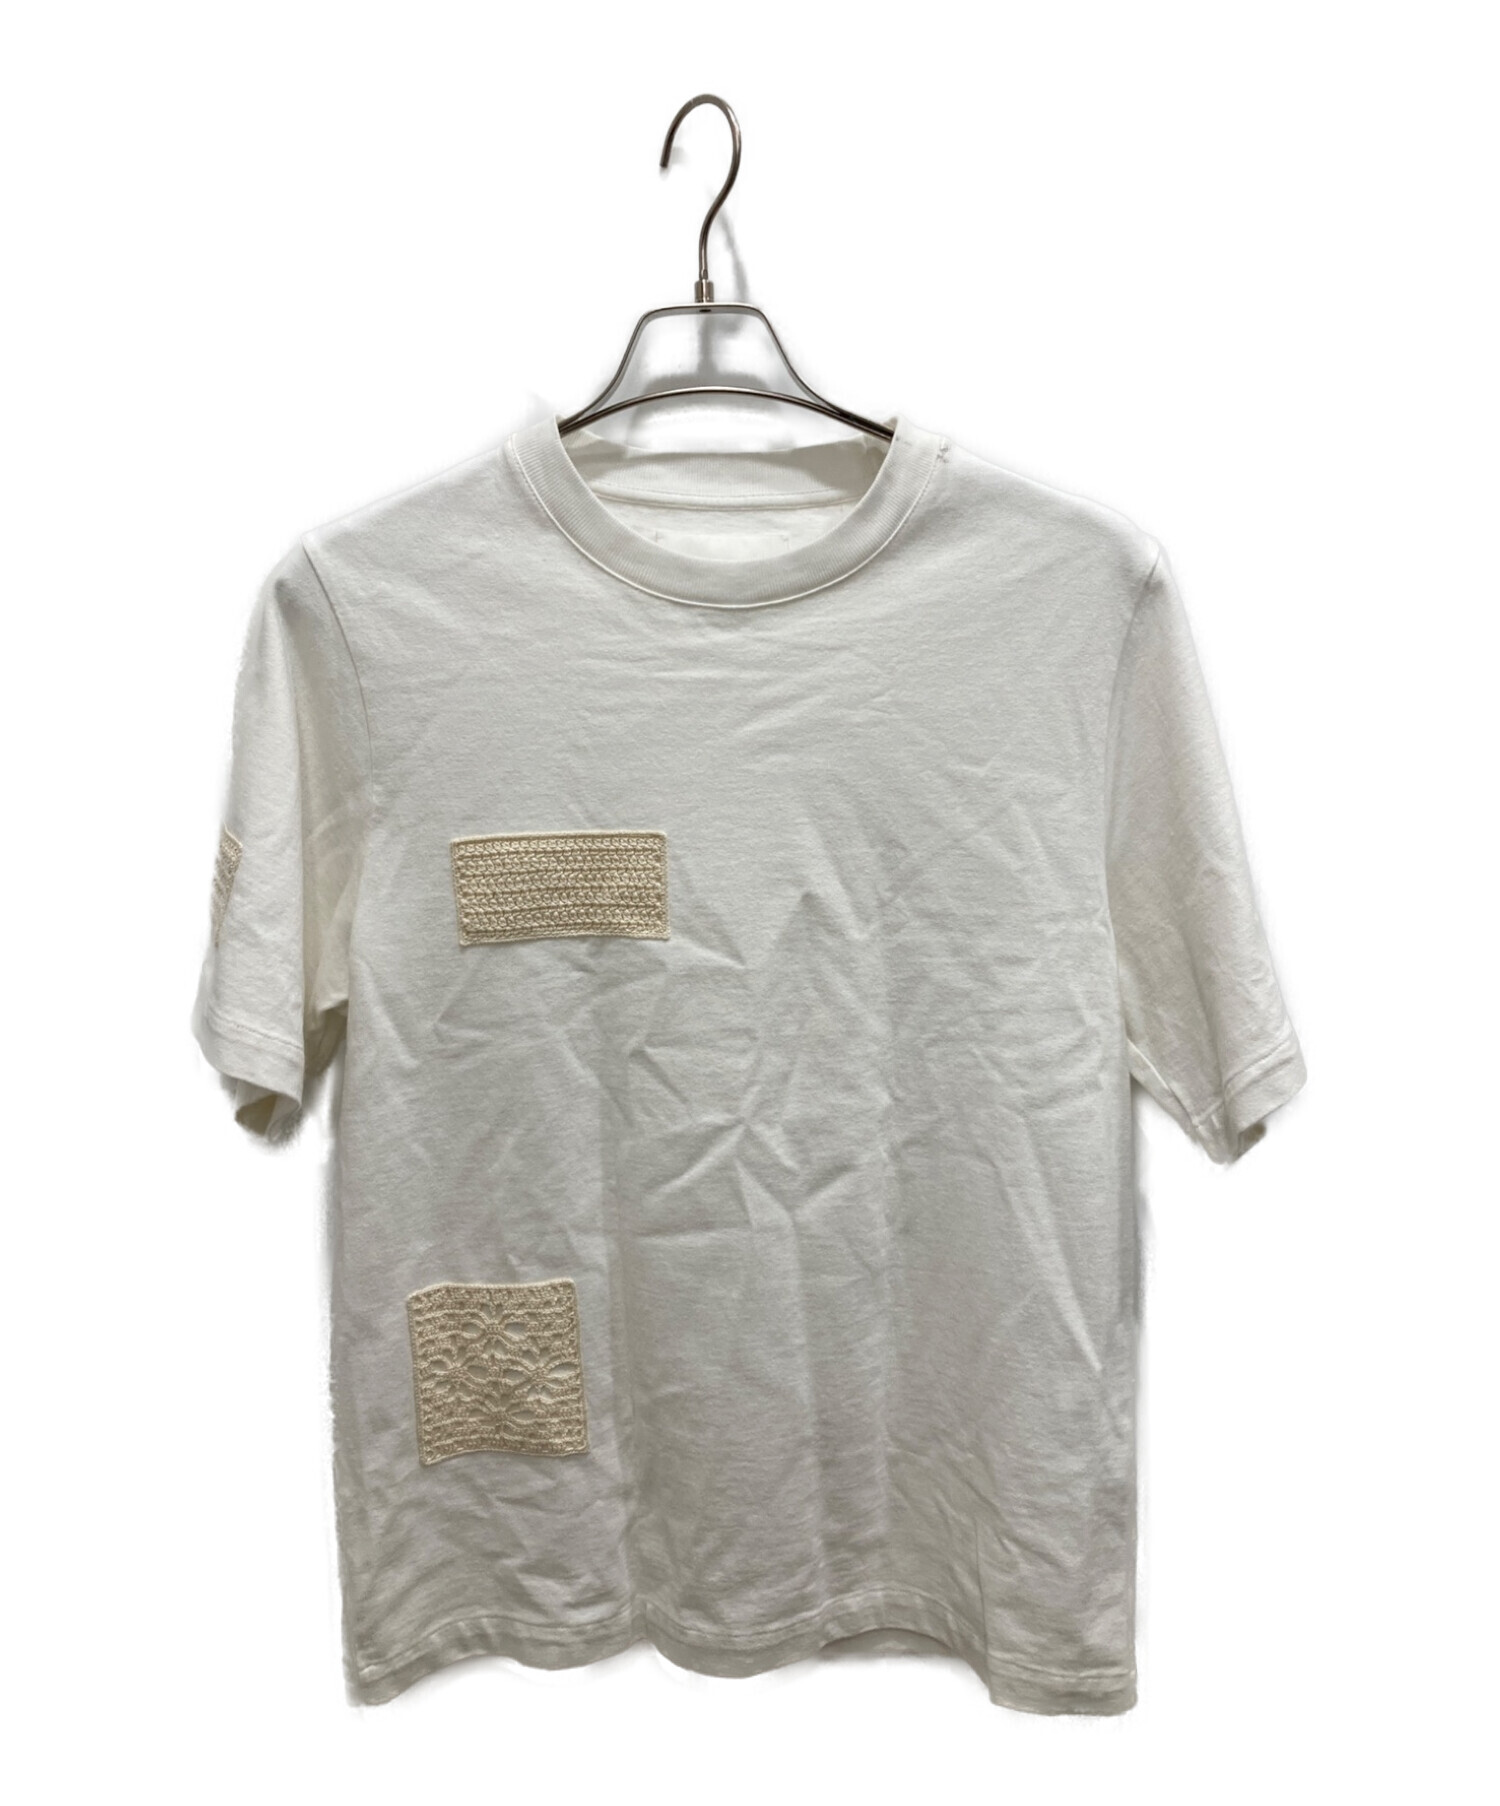 JIL SANDER (ジルサンダー) クロシェ編みパッチ付きTシャツ アイボリー サイズ:S